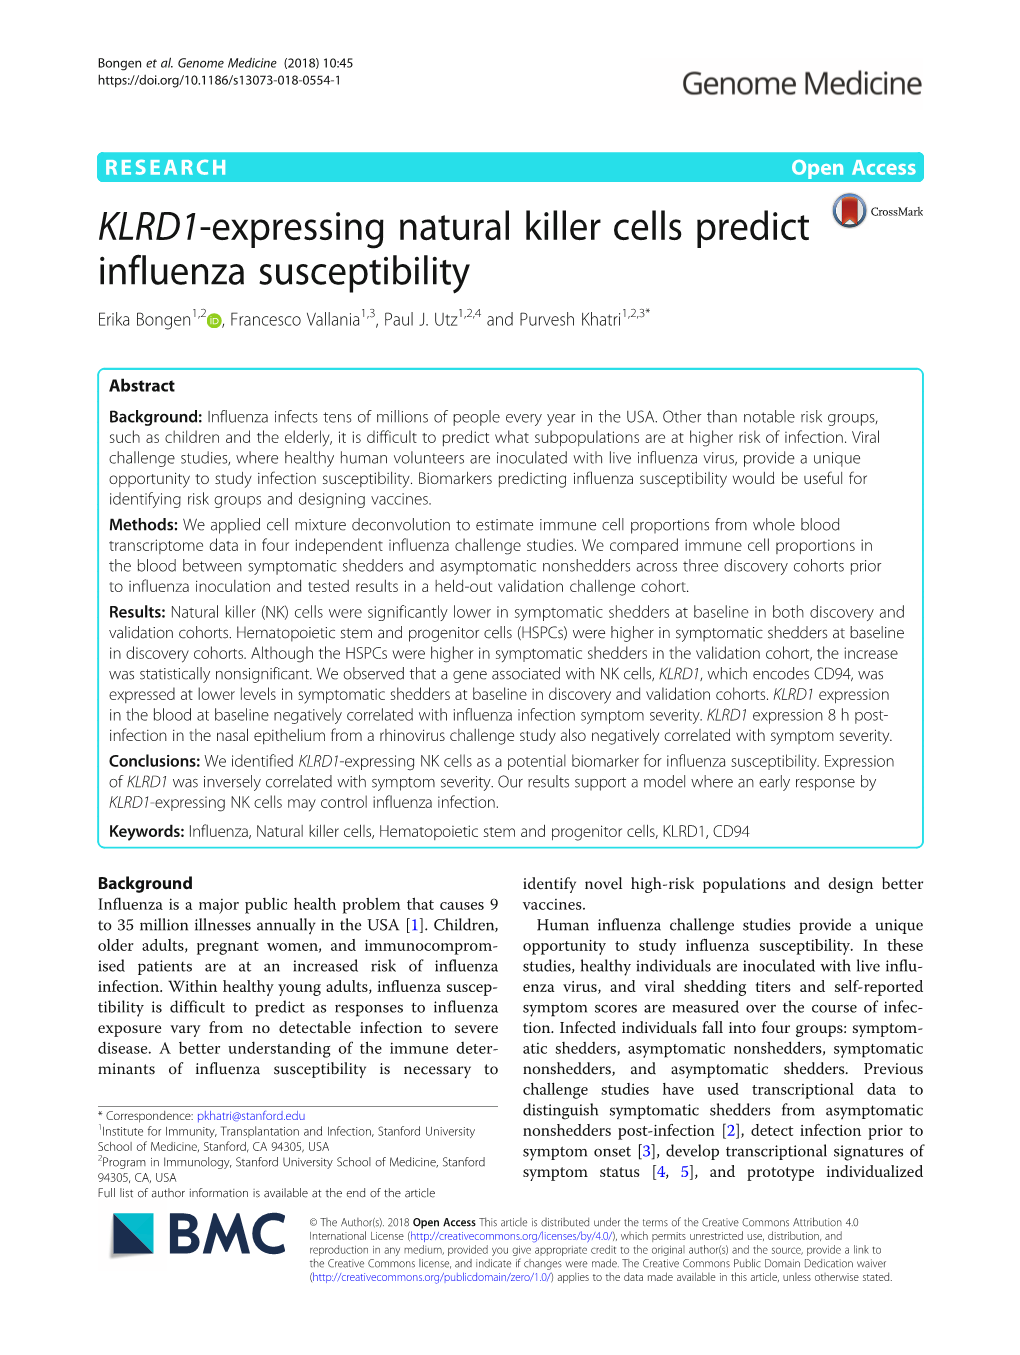 KLRD1-Expressing Natural Killer Cells Predict Influenza Susceptibility Erika Bongen1,2 , Francesco Vallania1,3, Paul J